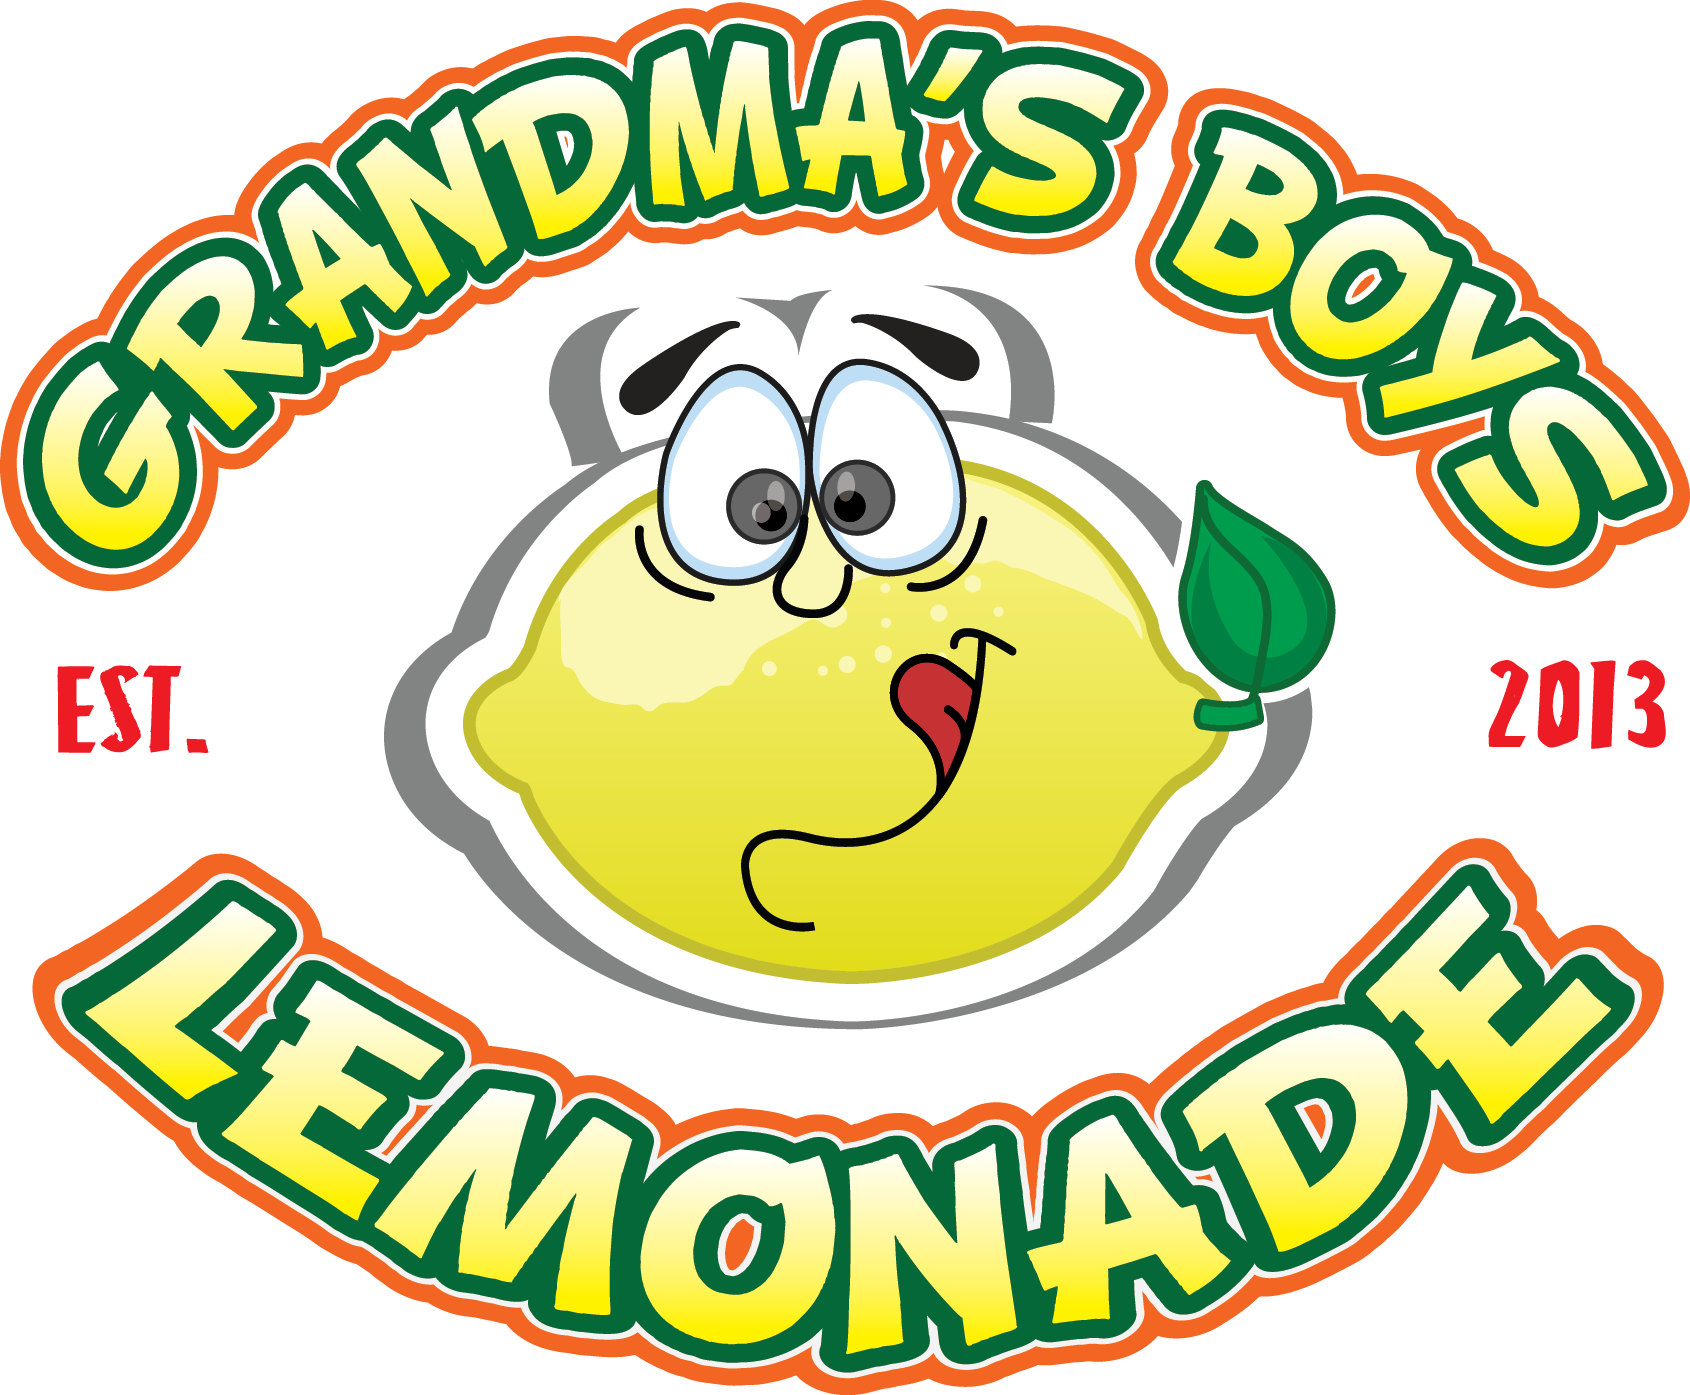 Grandma's Boys Logo